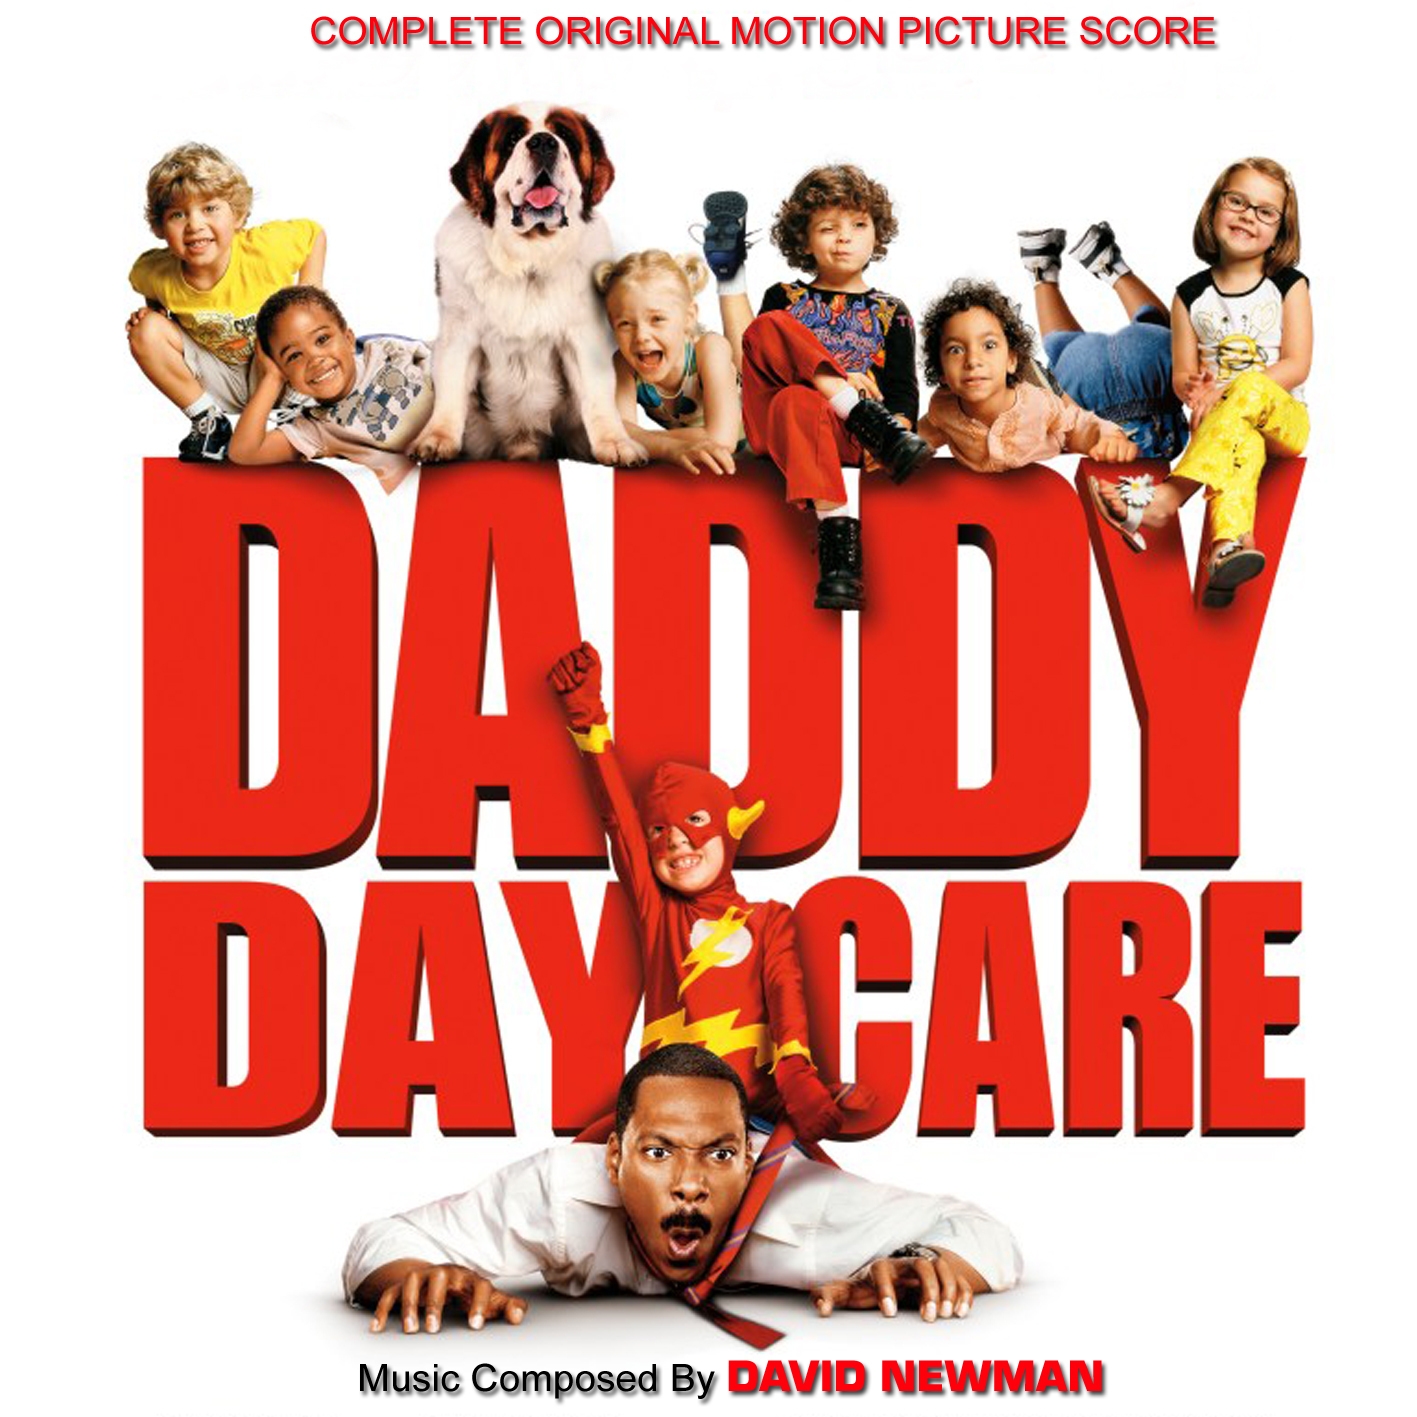 Daddy Daycare